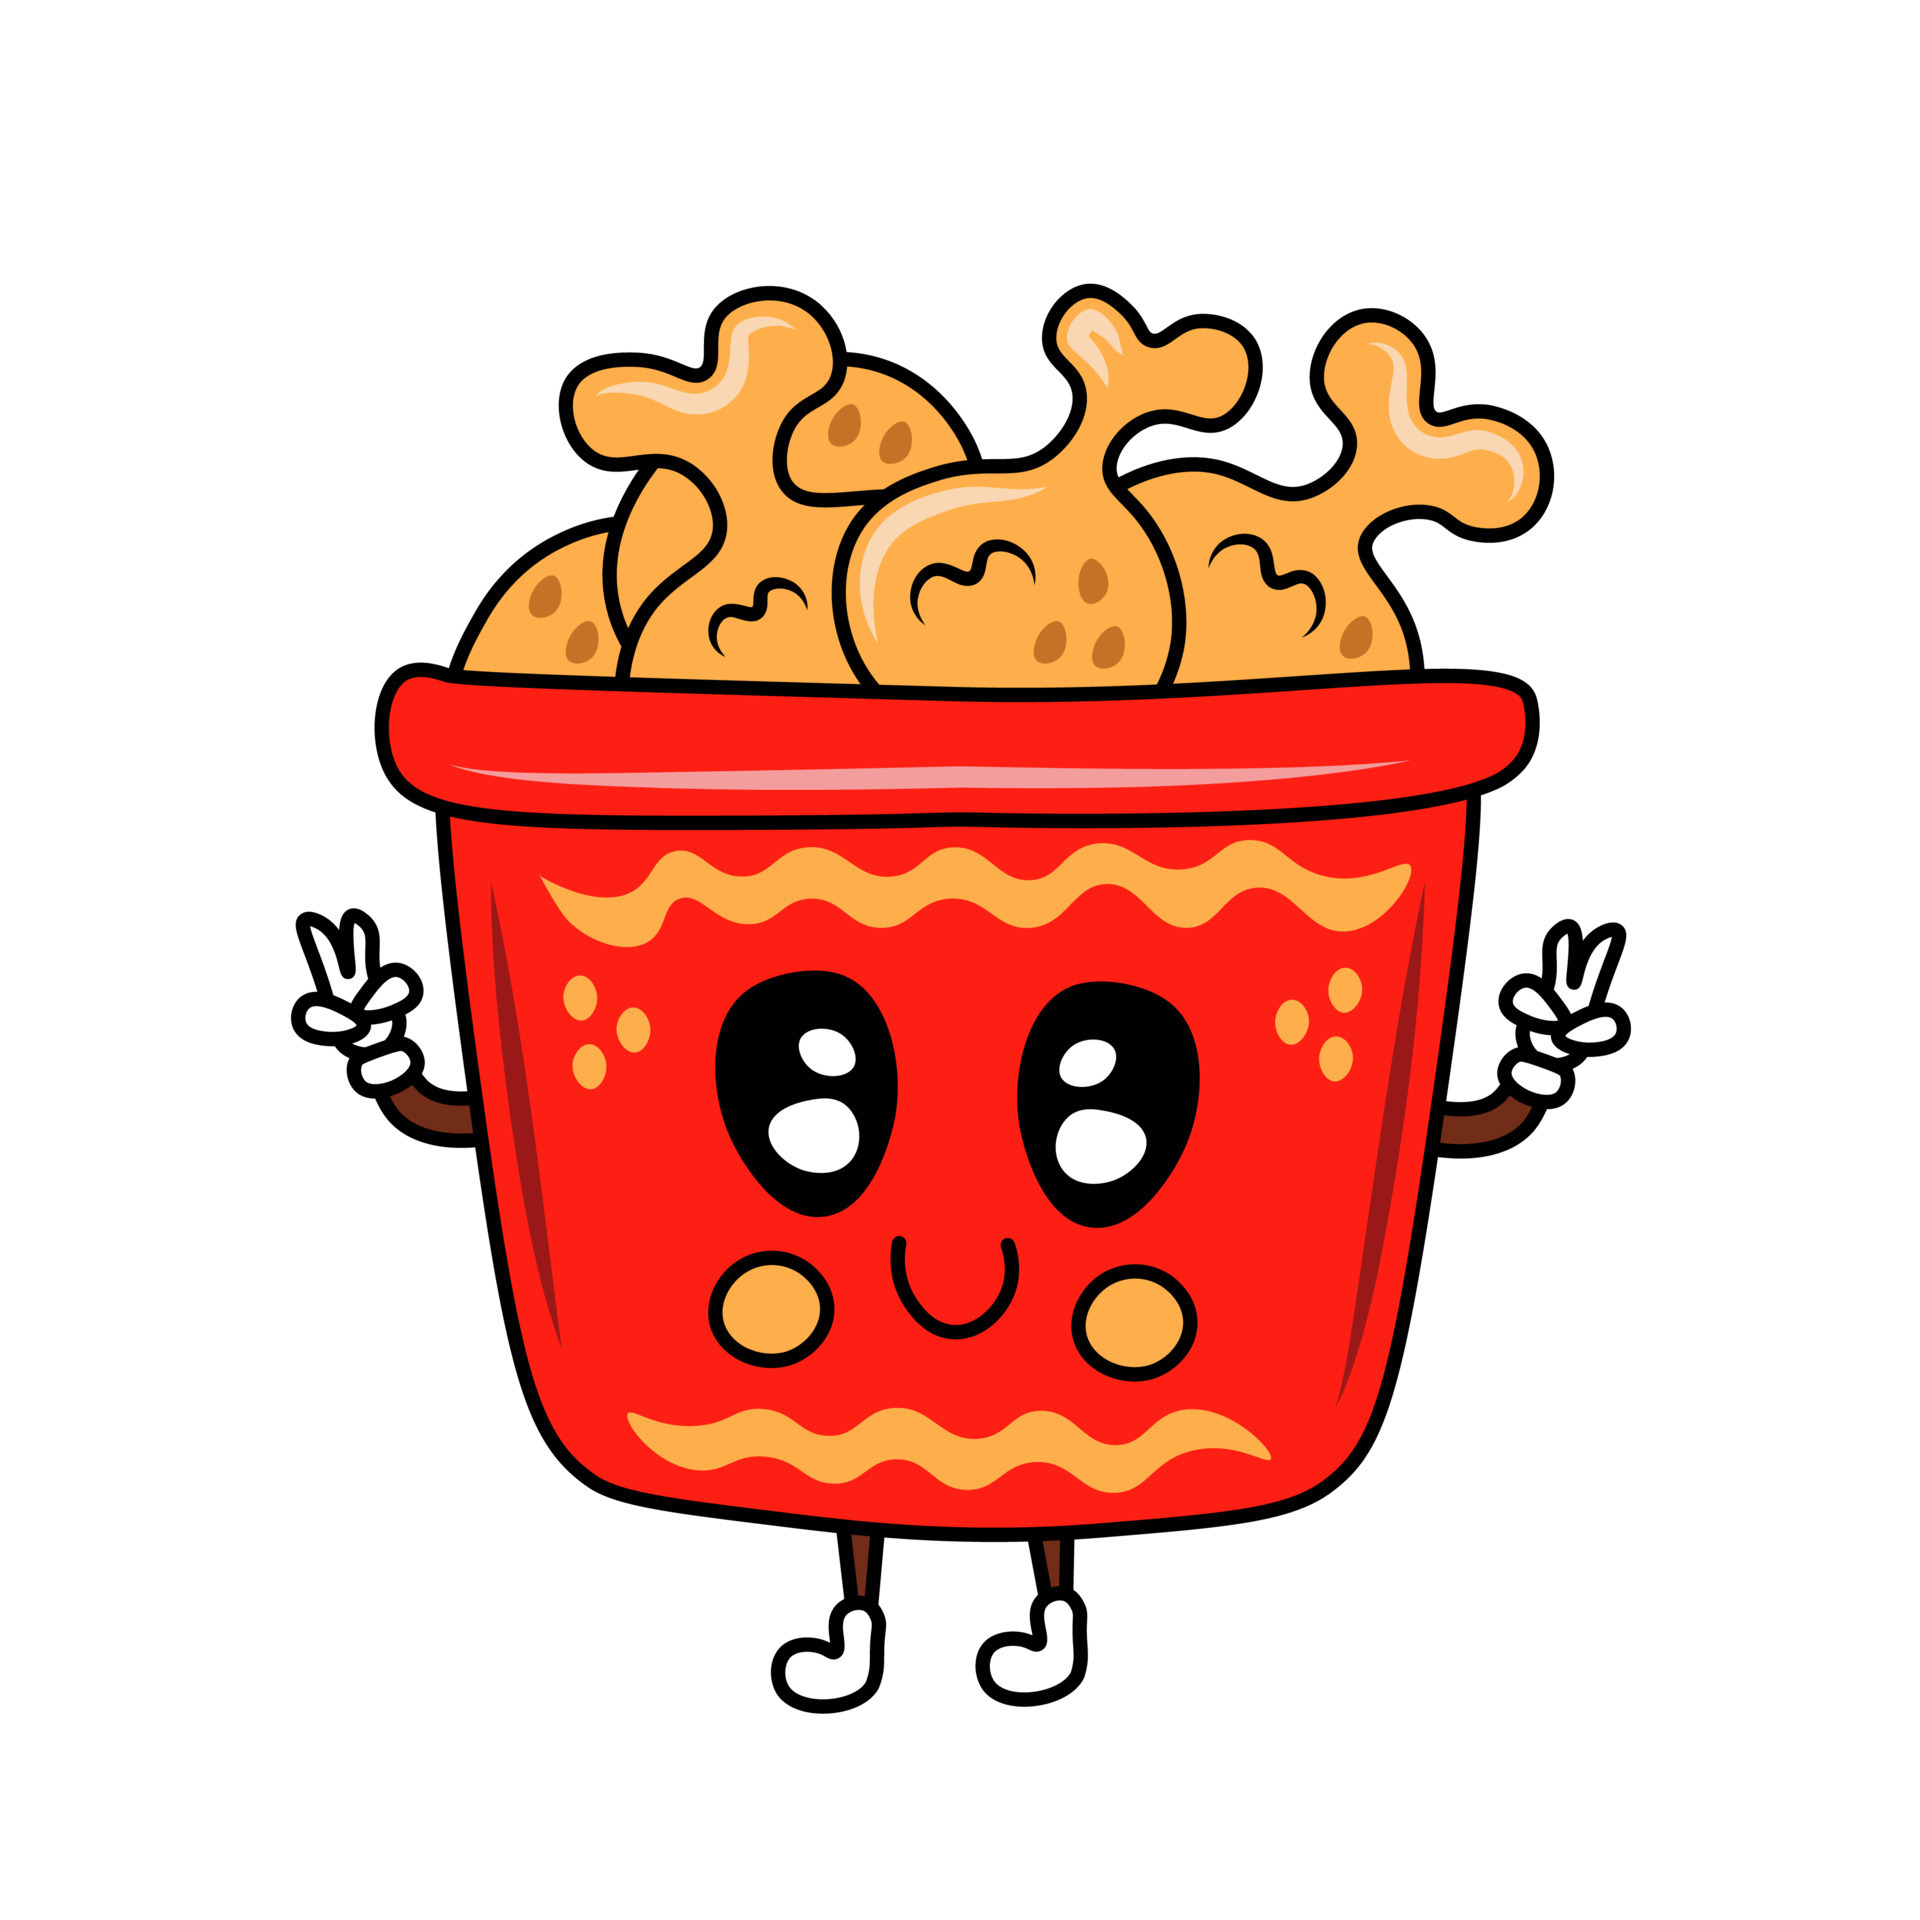 https://static.vecteezy.com/system/resources/previews/012/934/120/original/crispy-fried-chicken-box-cute-cartoon-character-vector.jpg